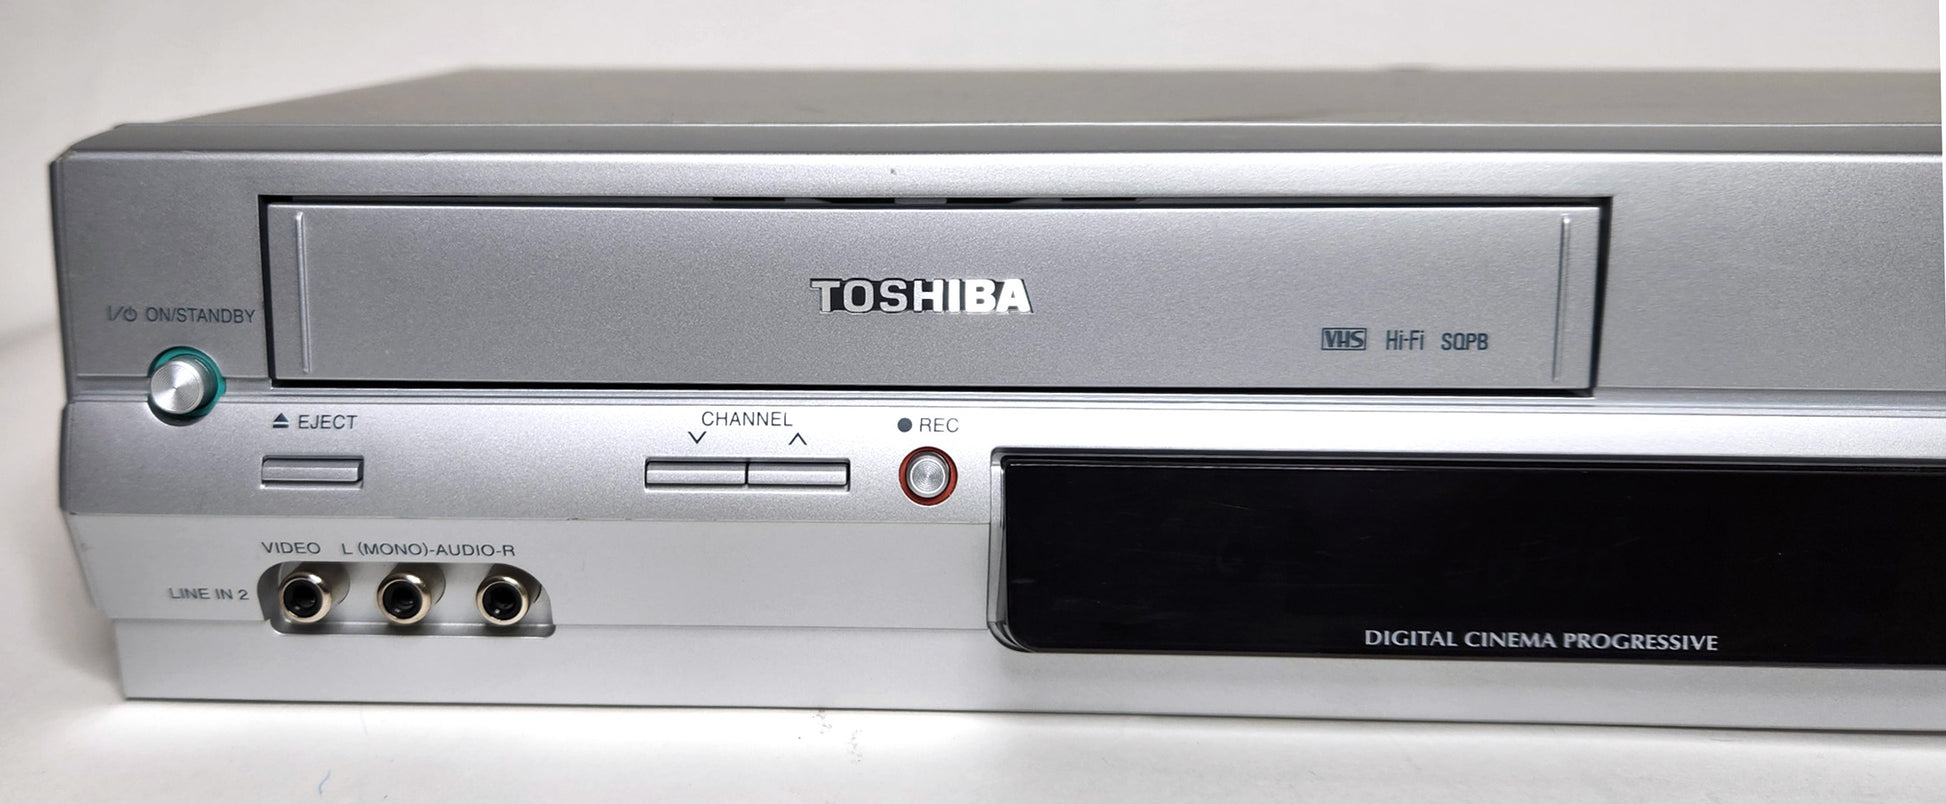 Toshiba SD-V394SU VCR/DVD Player Combo - Left